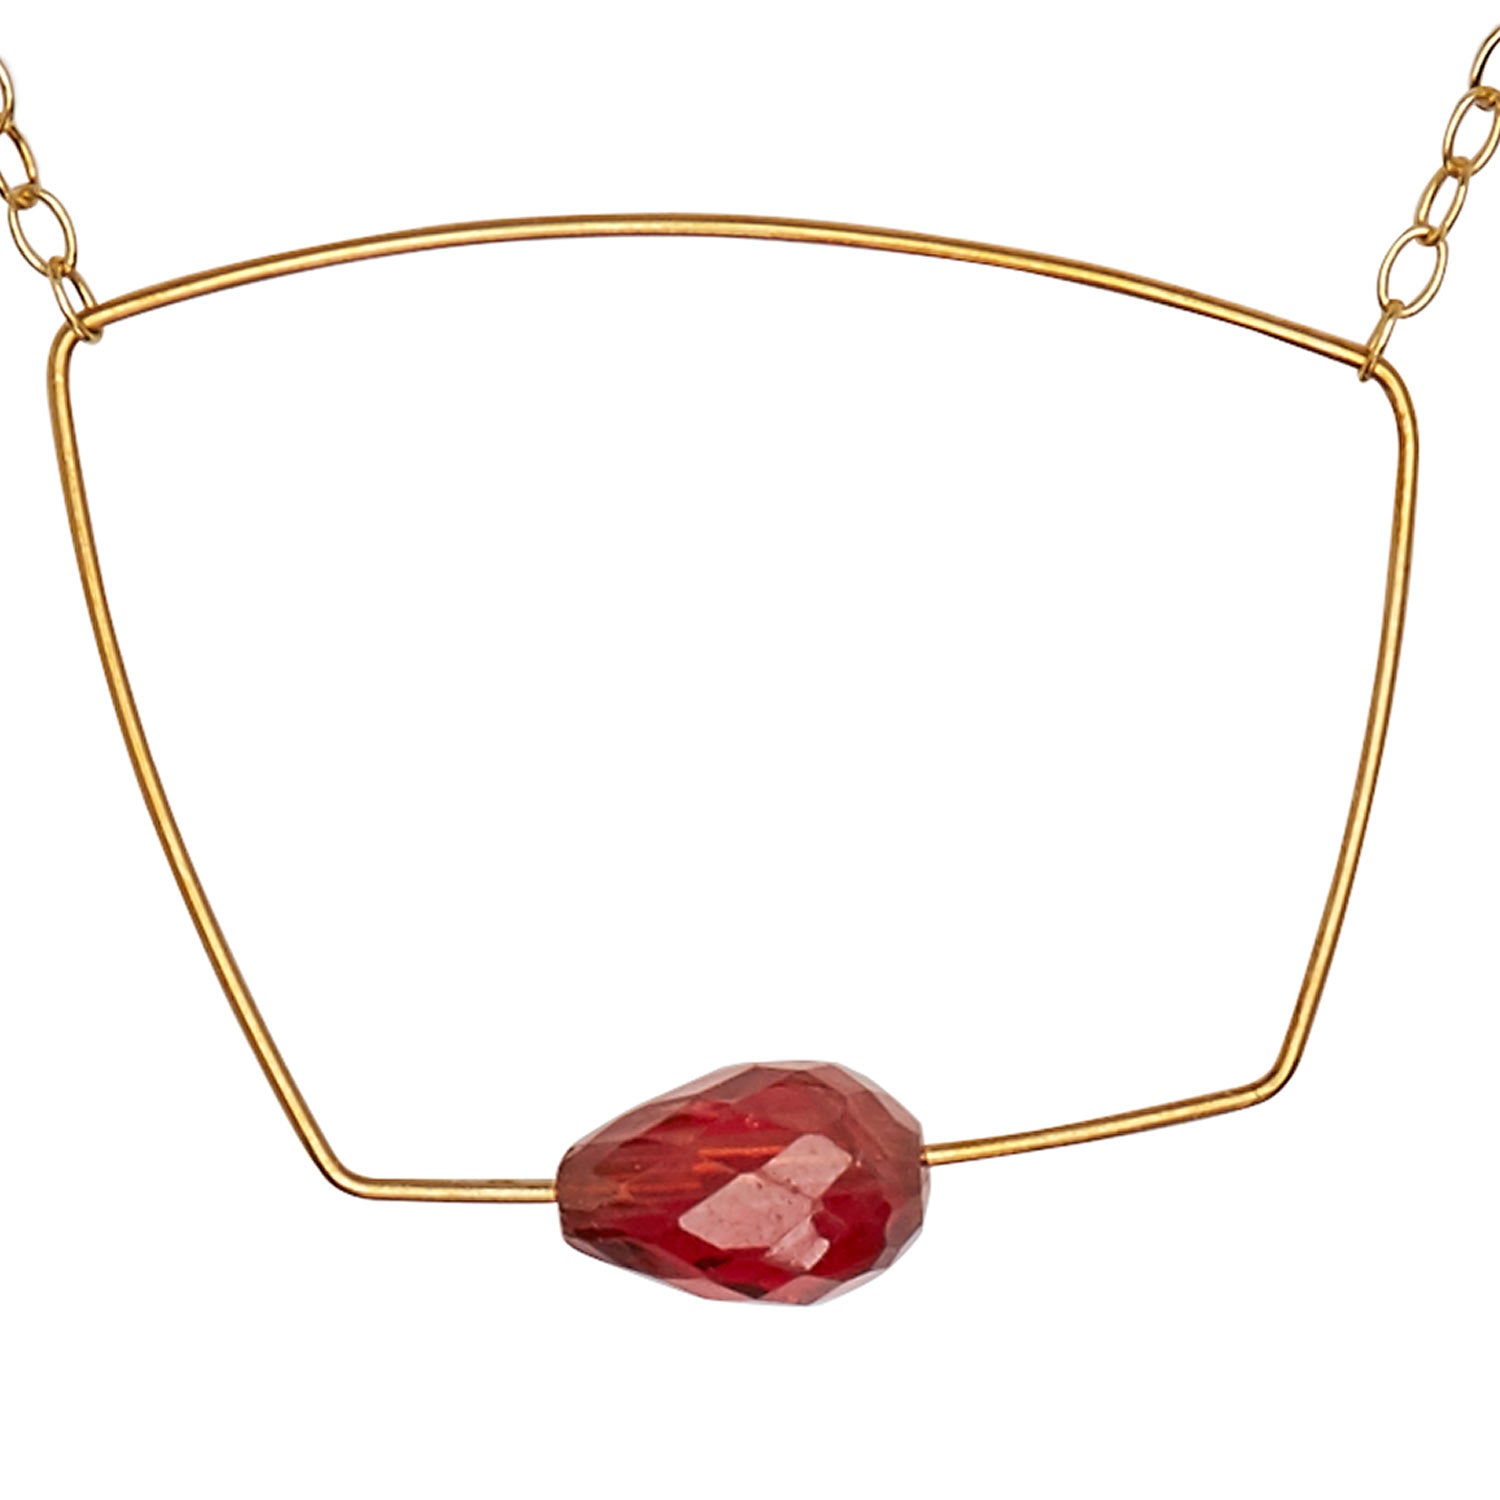 Asymmetric Square Pendant Necklace with Garnet